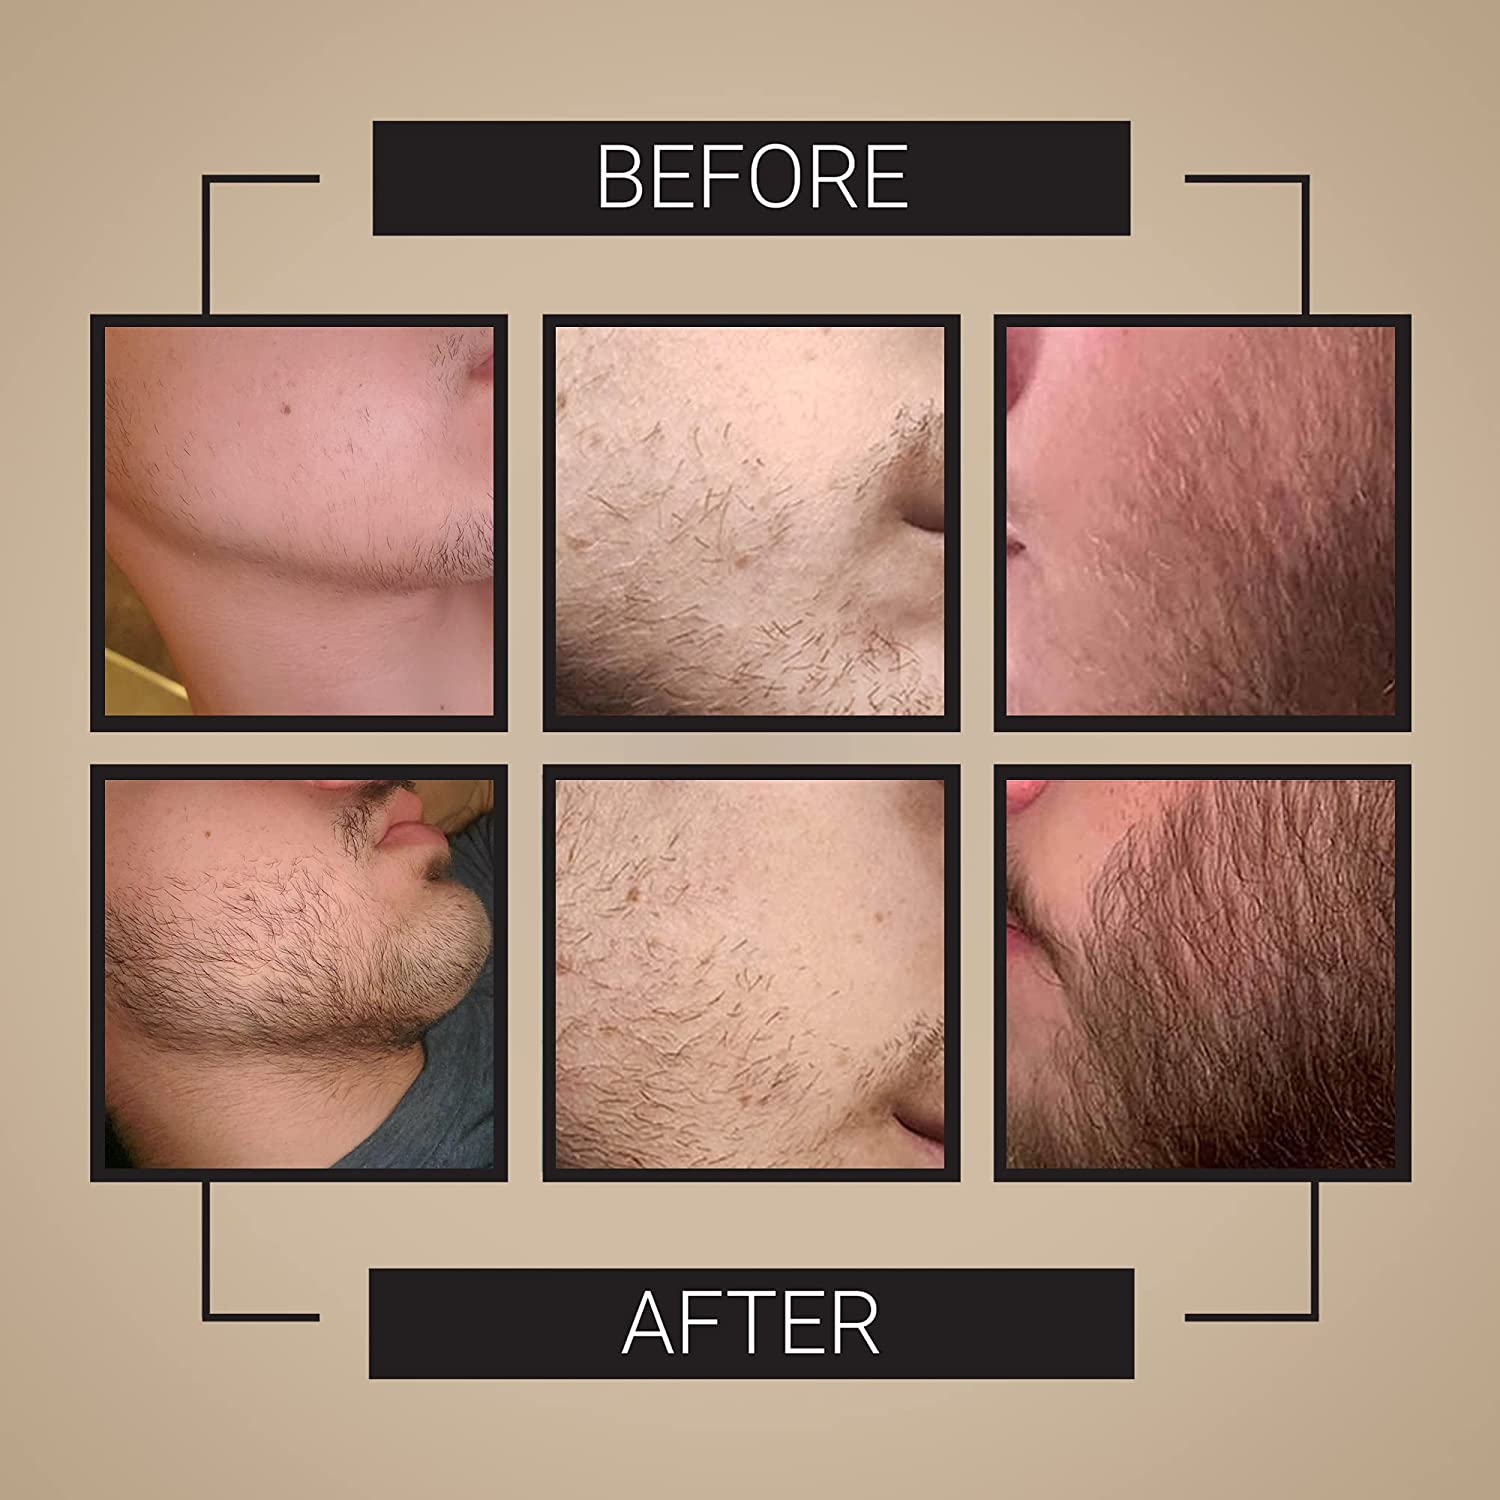 Derma Roller for Beard Growth + Beard Growth Serum - Stimulate Beard and Hair Growth - Derma Roller for Men - Amazing Beard Growth Kit - image 3 of 6